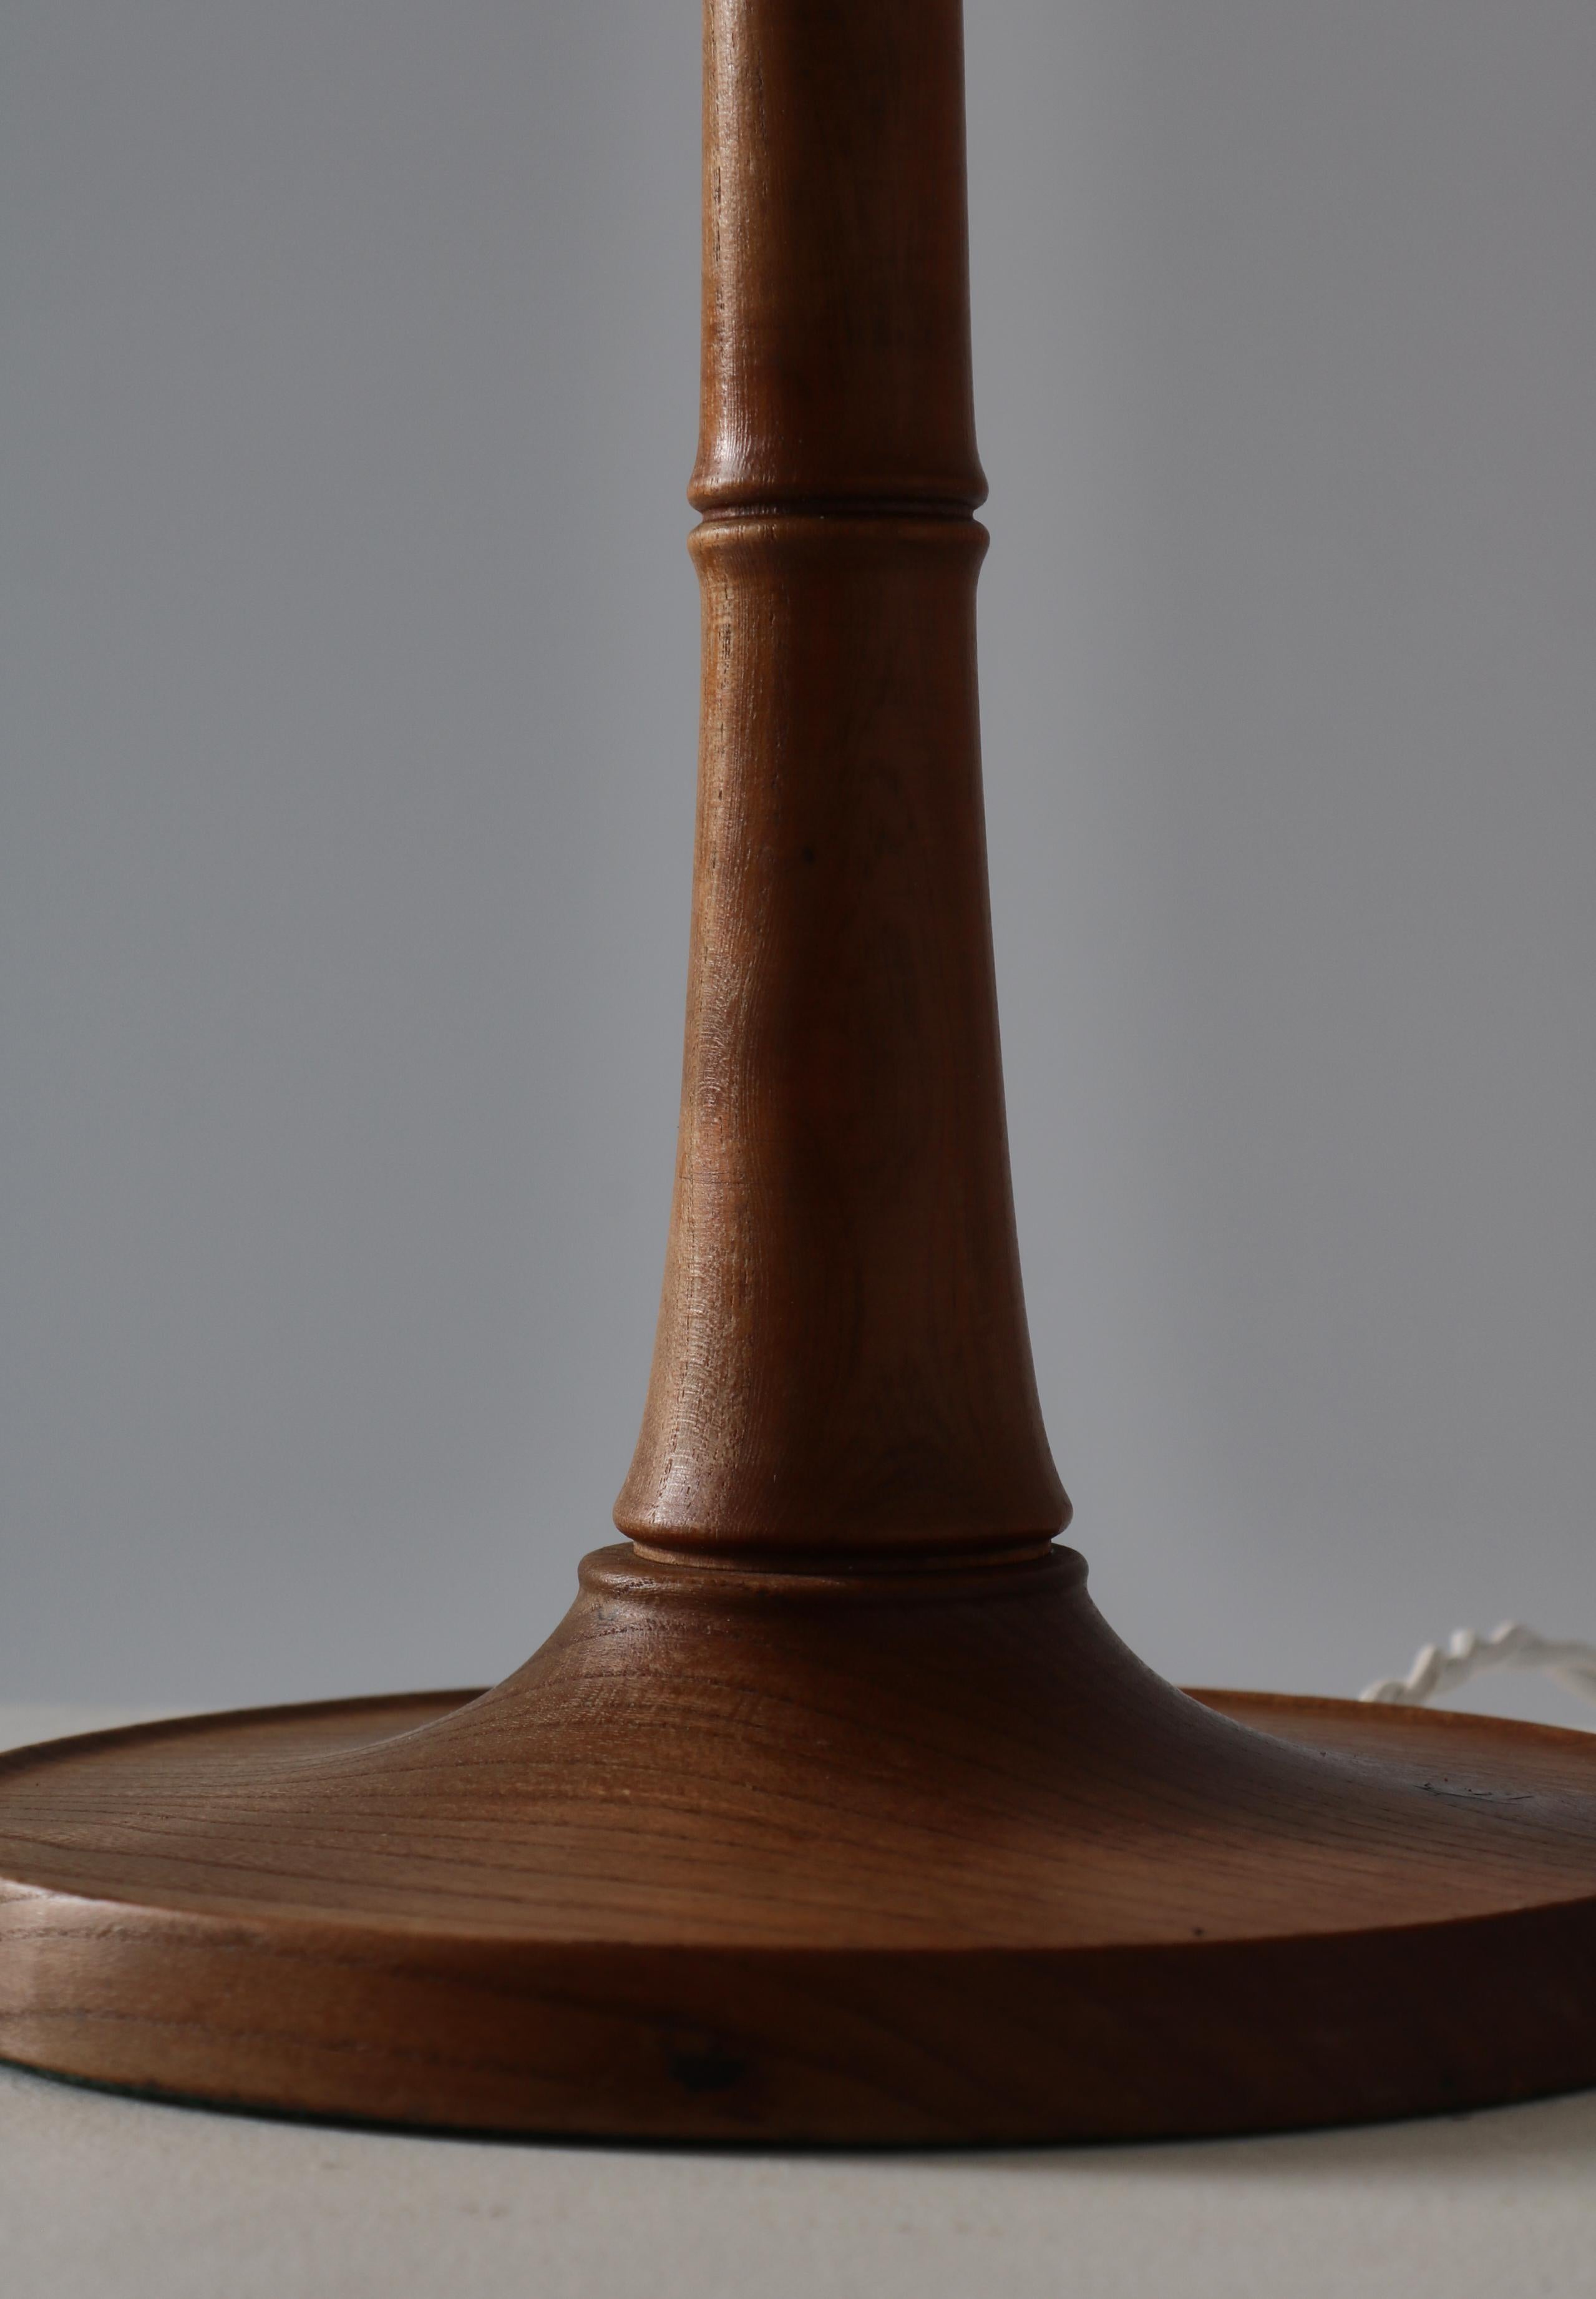 Scandinavian Modern Kaare Klint Table Lamp in Ash Wood and Hand Folded Le Klint Shade, Denmark 1940s For Sale